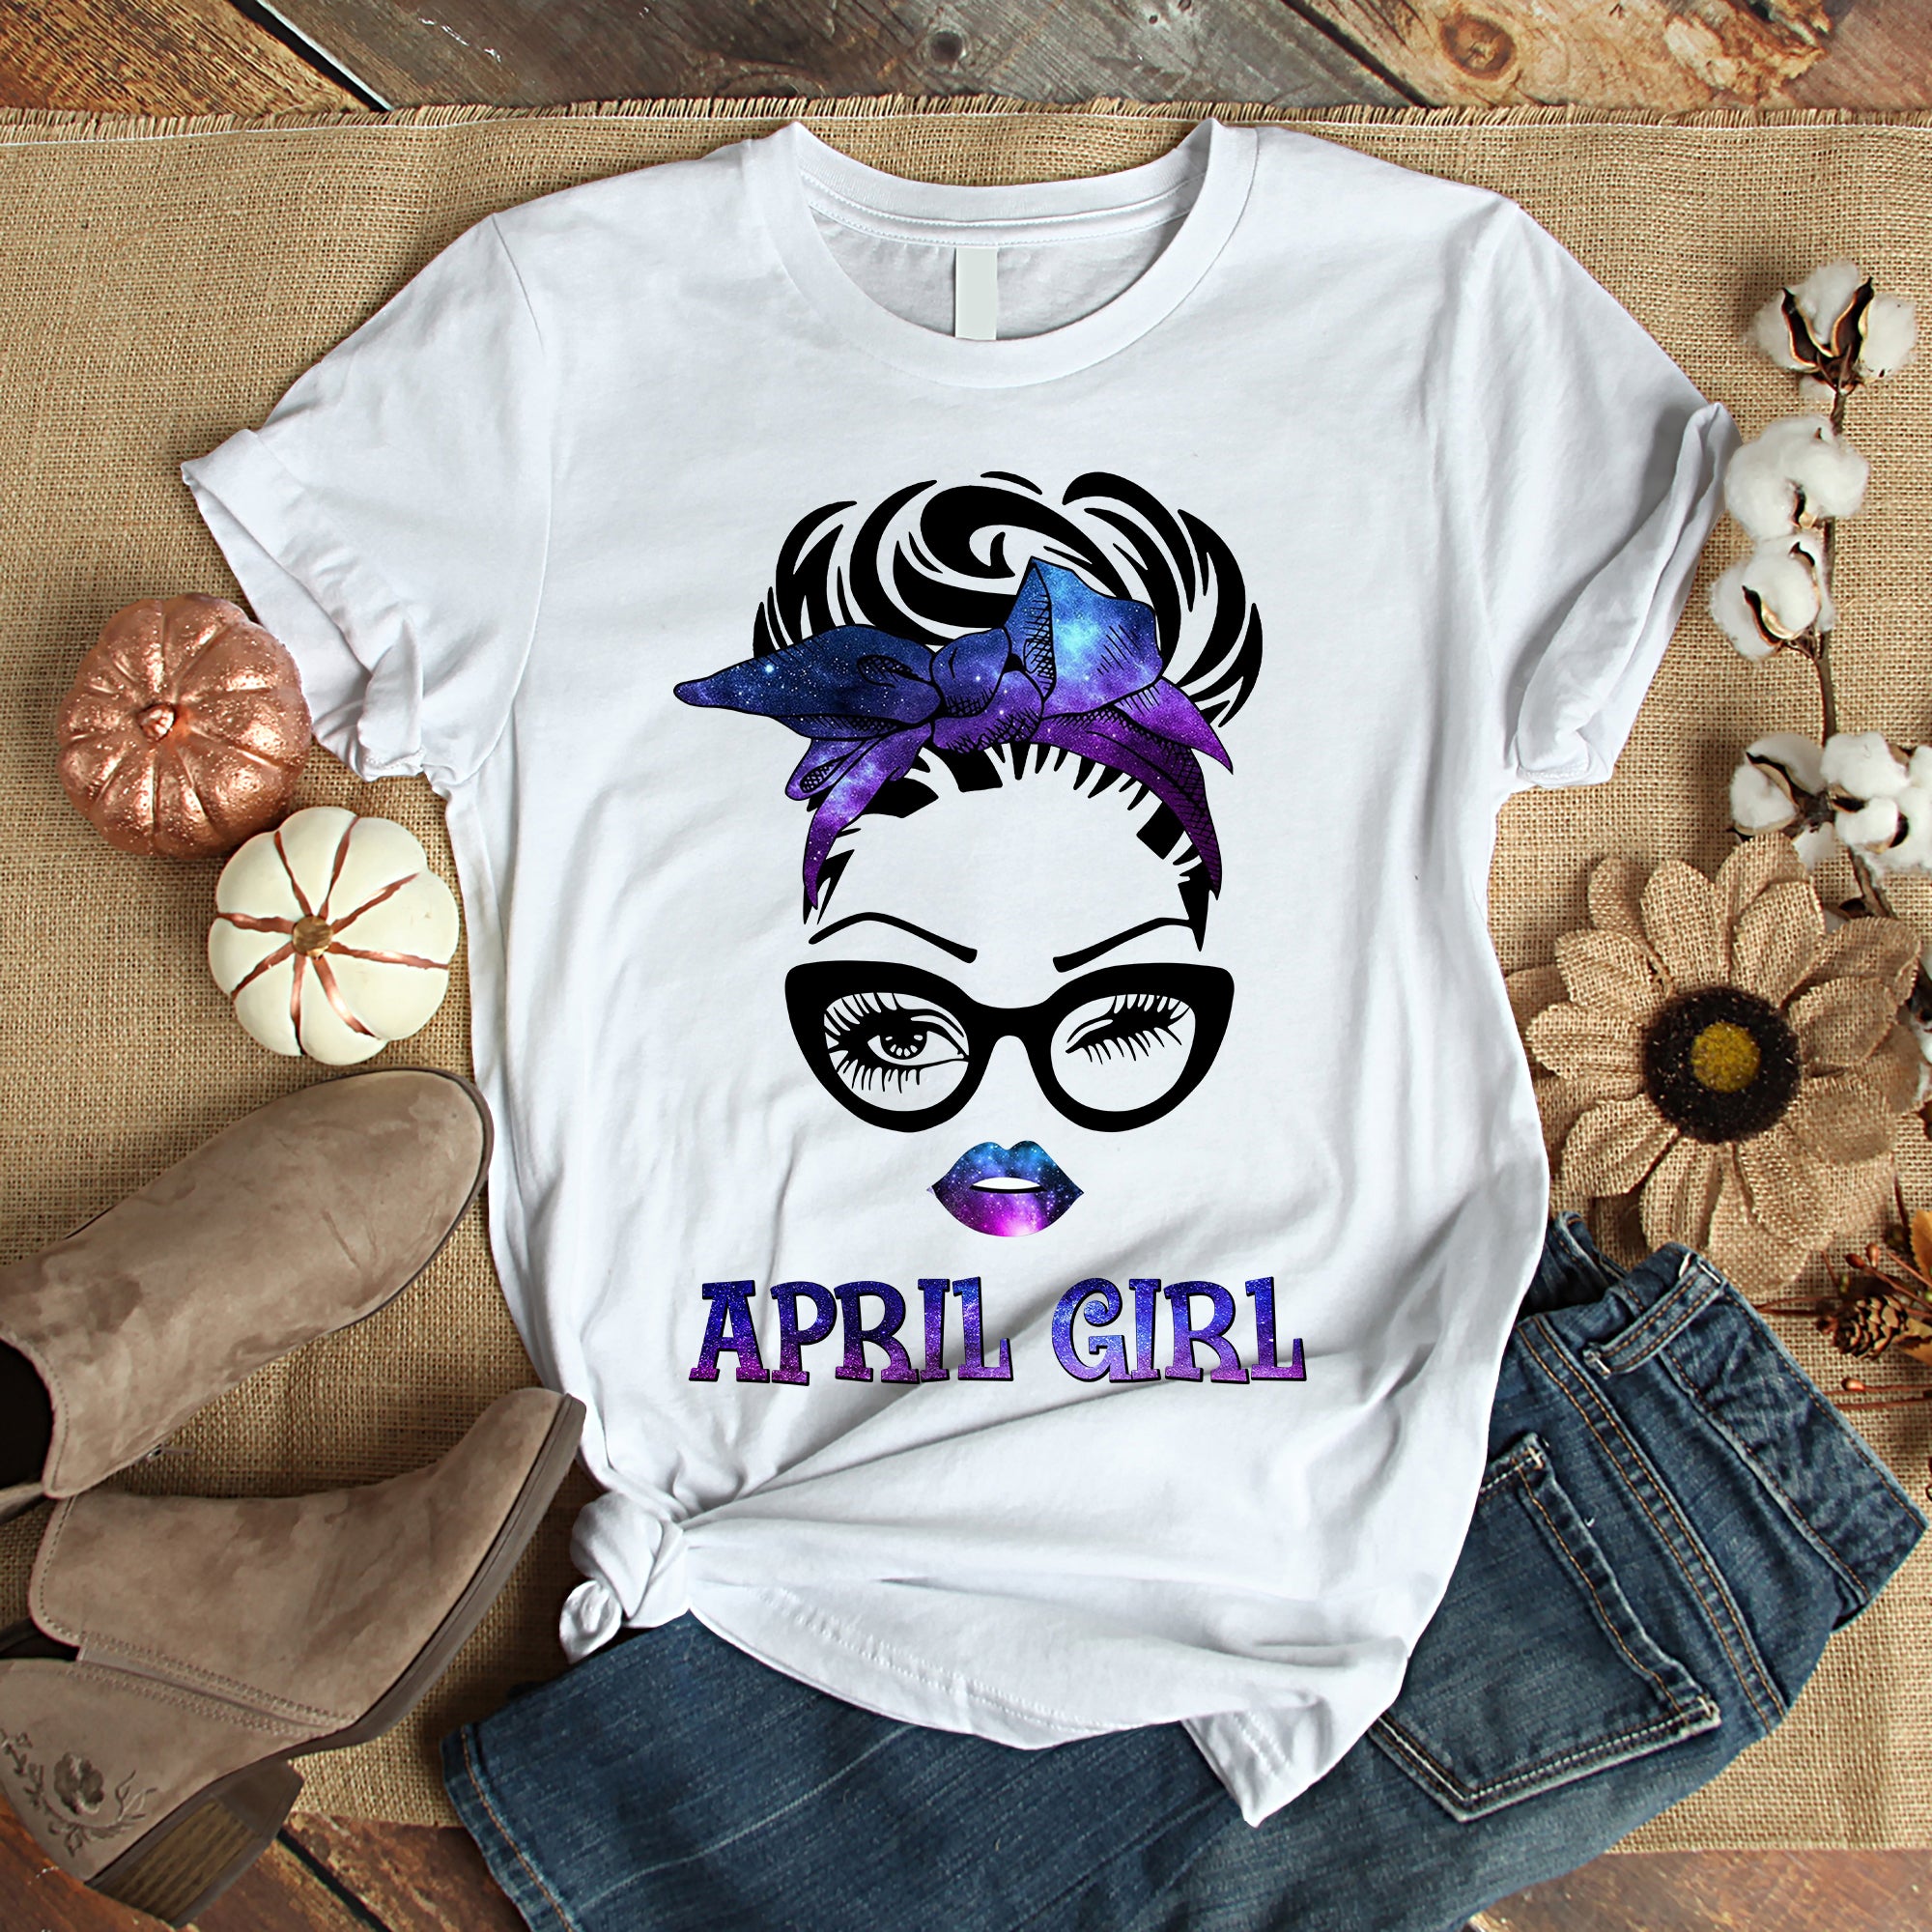 April Girl Birthday Shirt For Women, Girls, Sisters. Happy Birthday T-Shirt